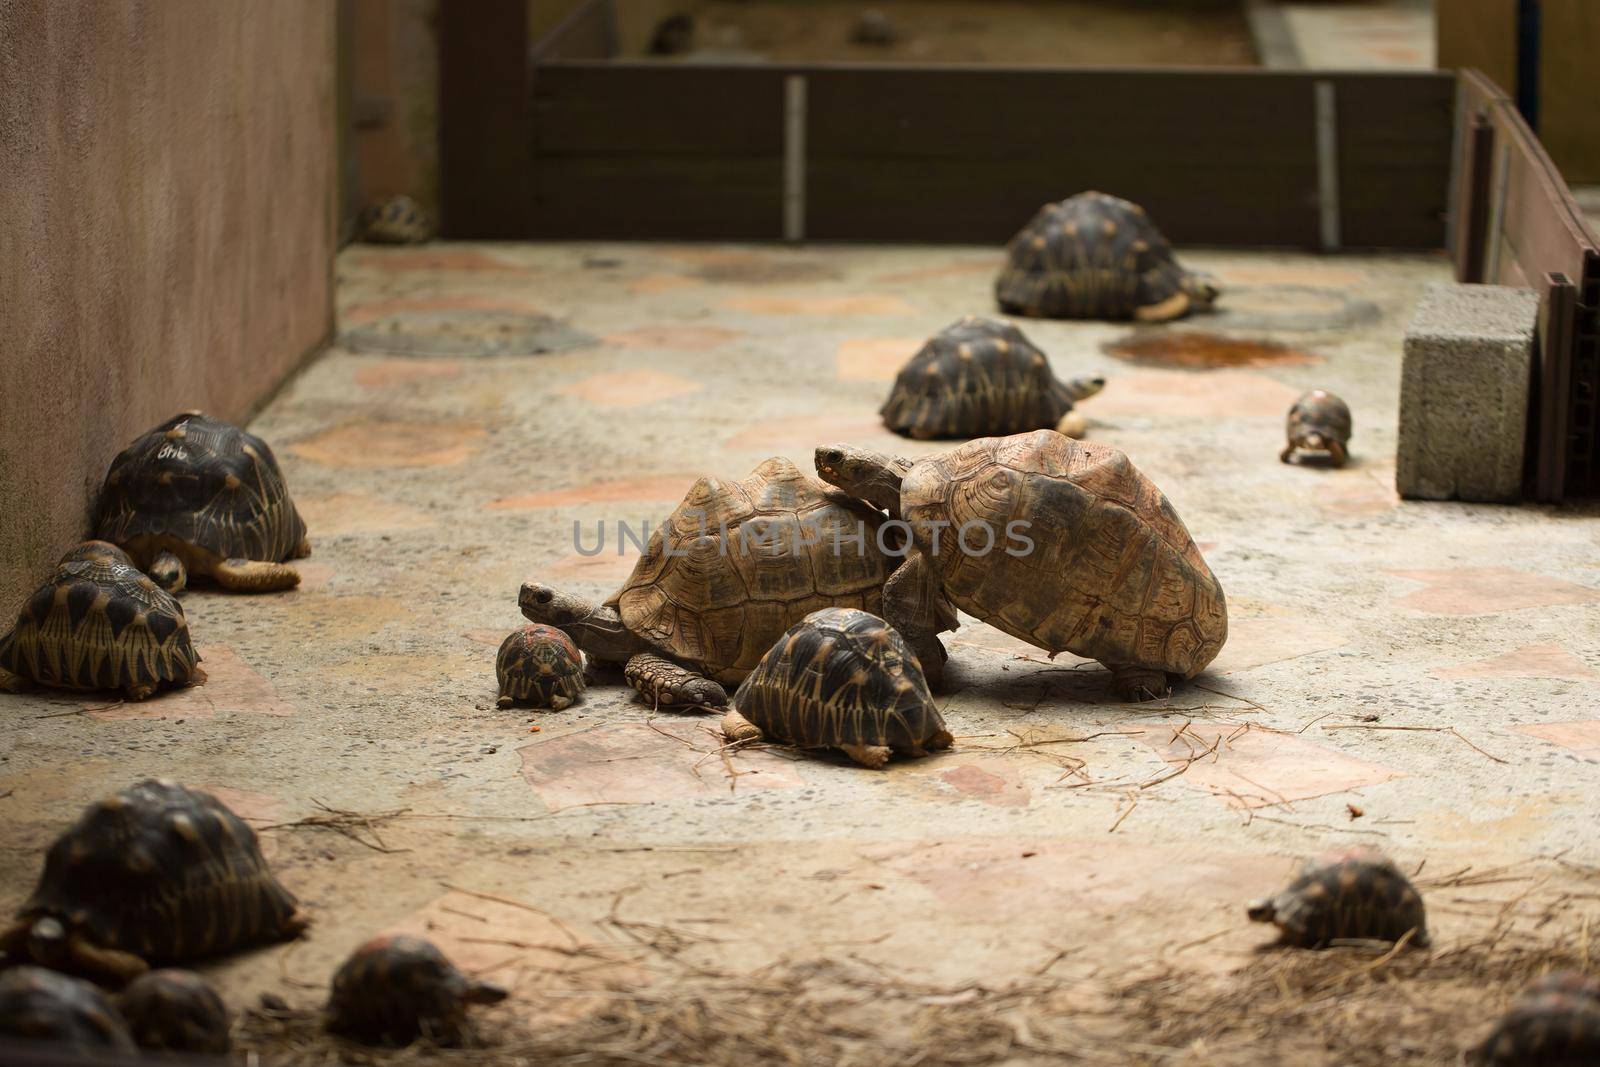 Huge Seychelles tortoises mating at the zoo.